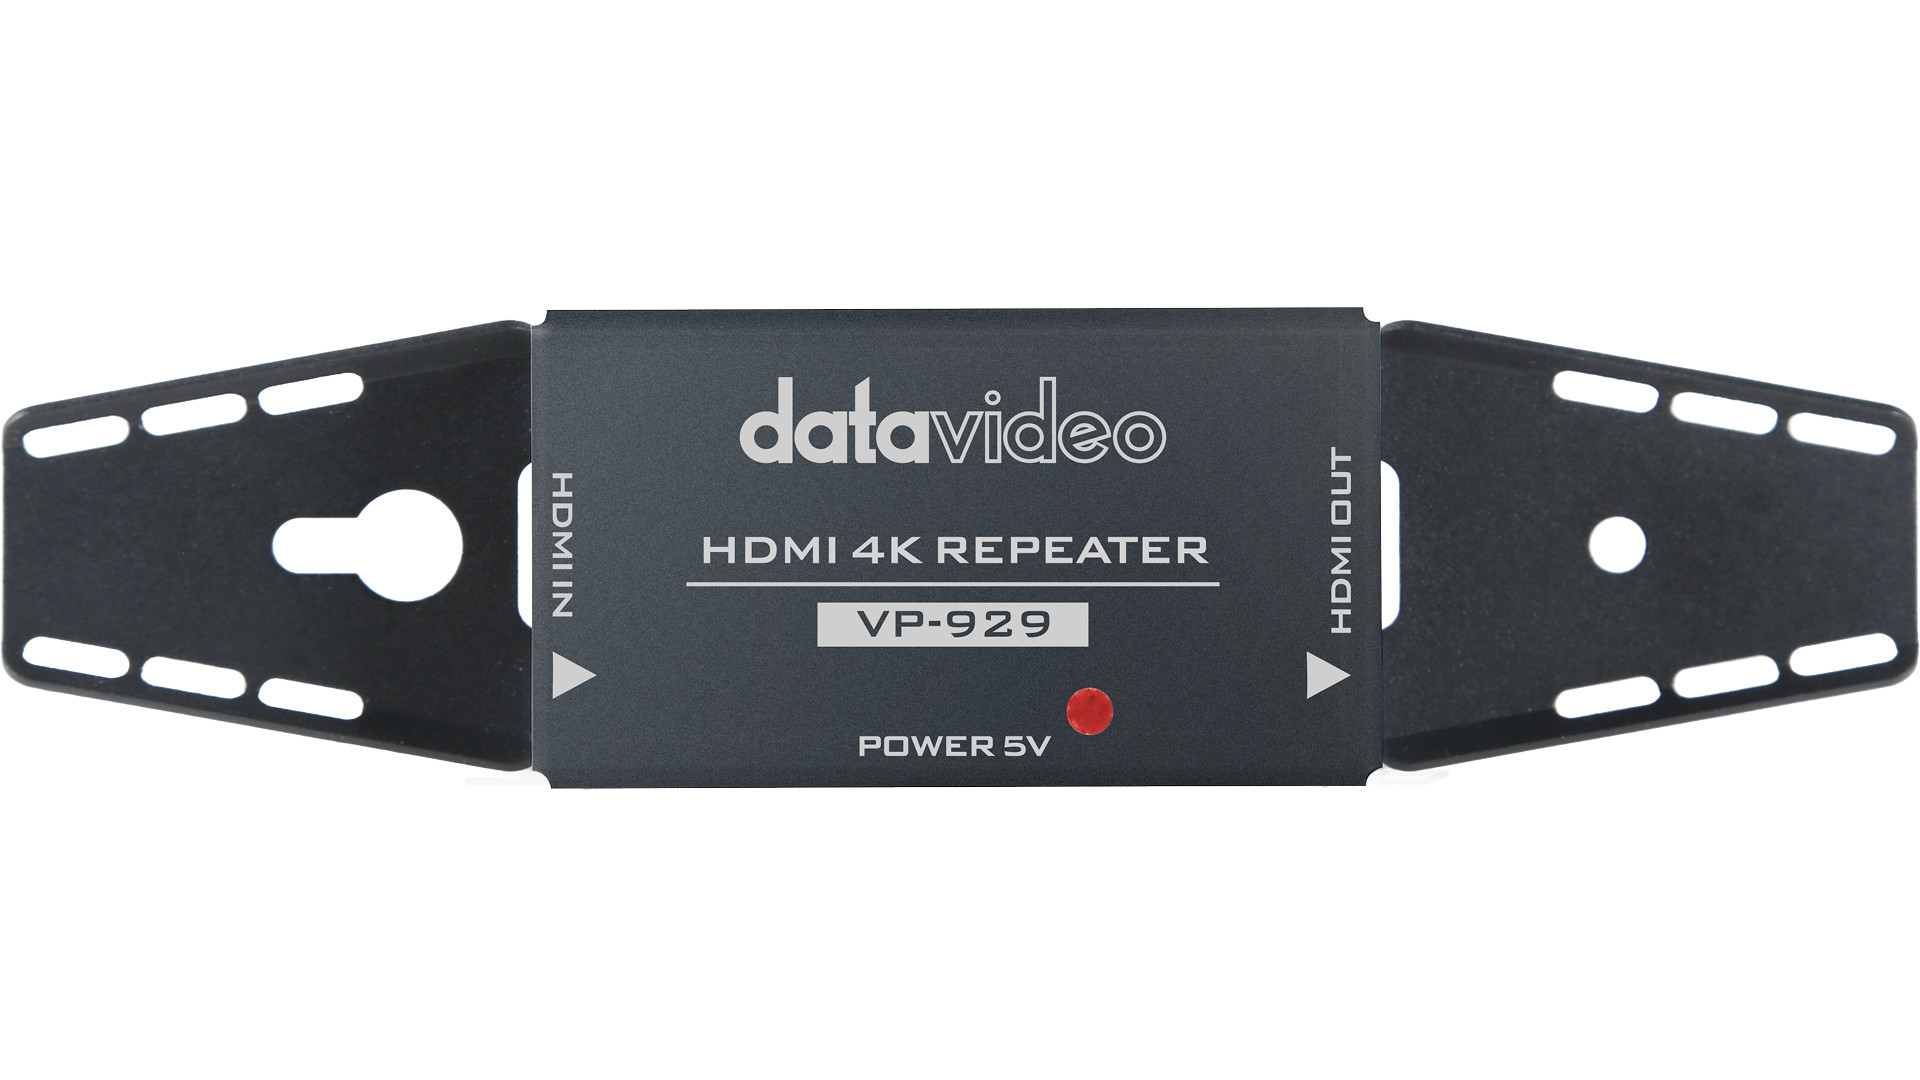 Datavideo VP-929 UHD 4K HDMI Repeater